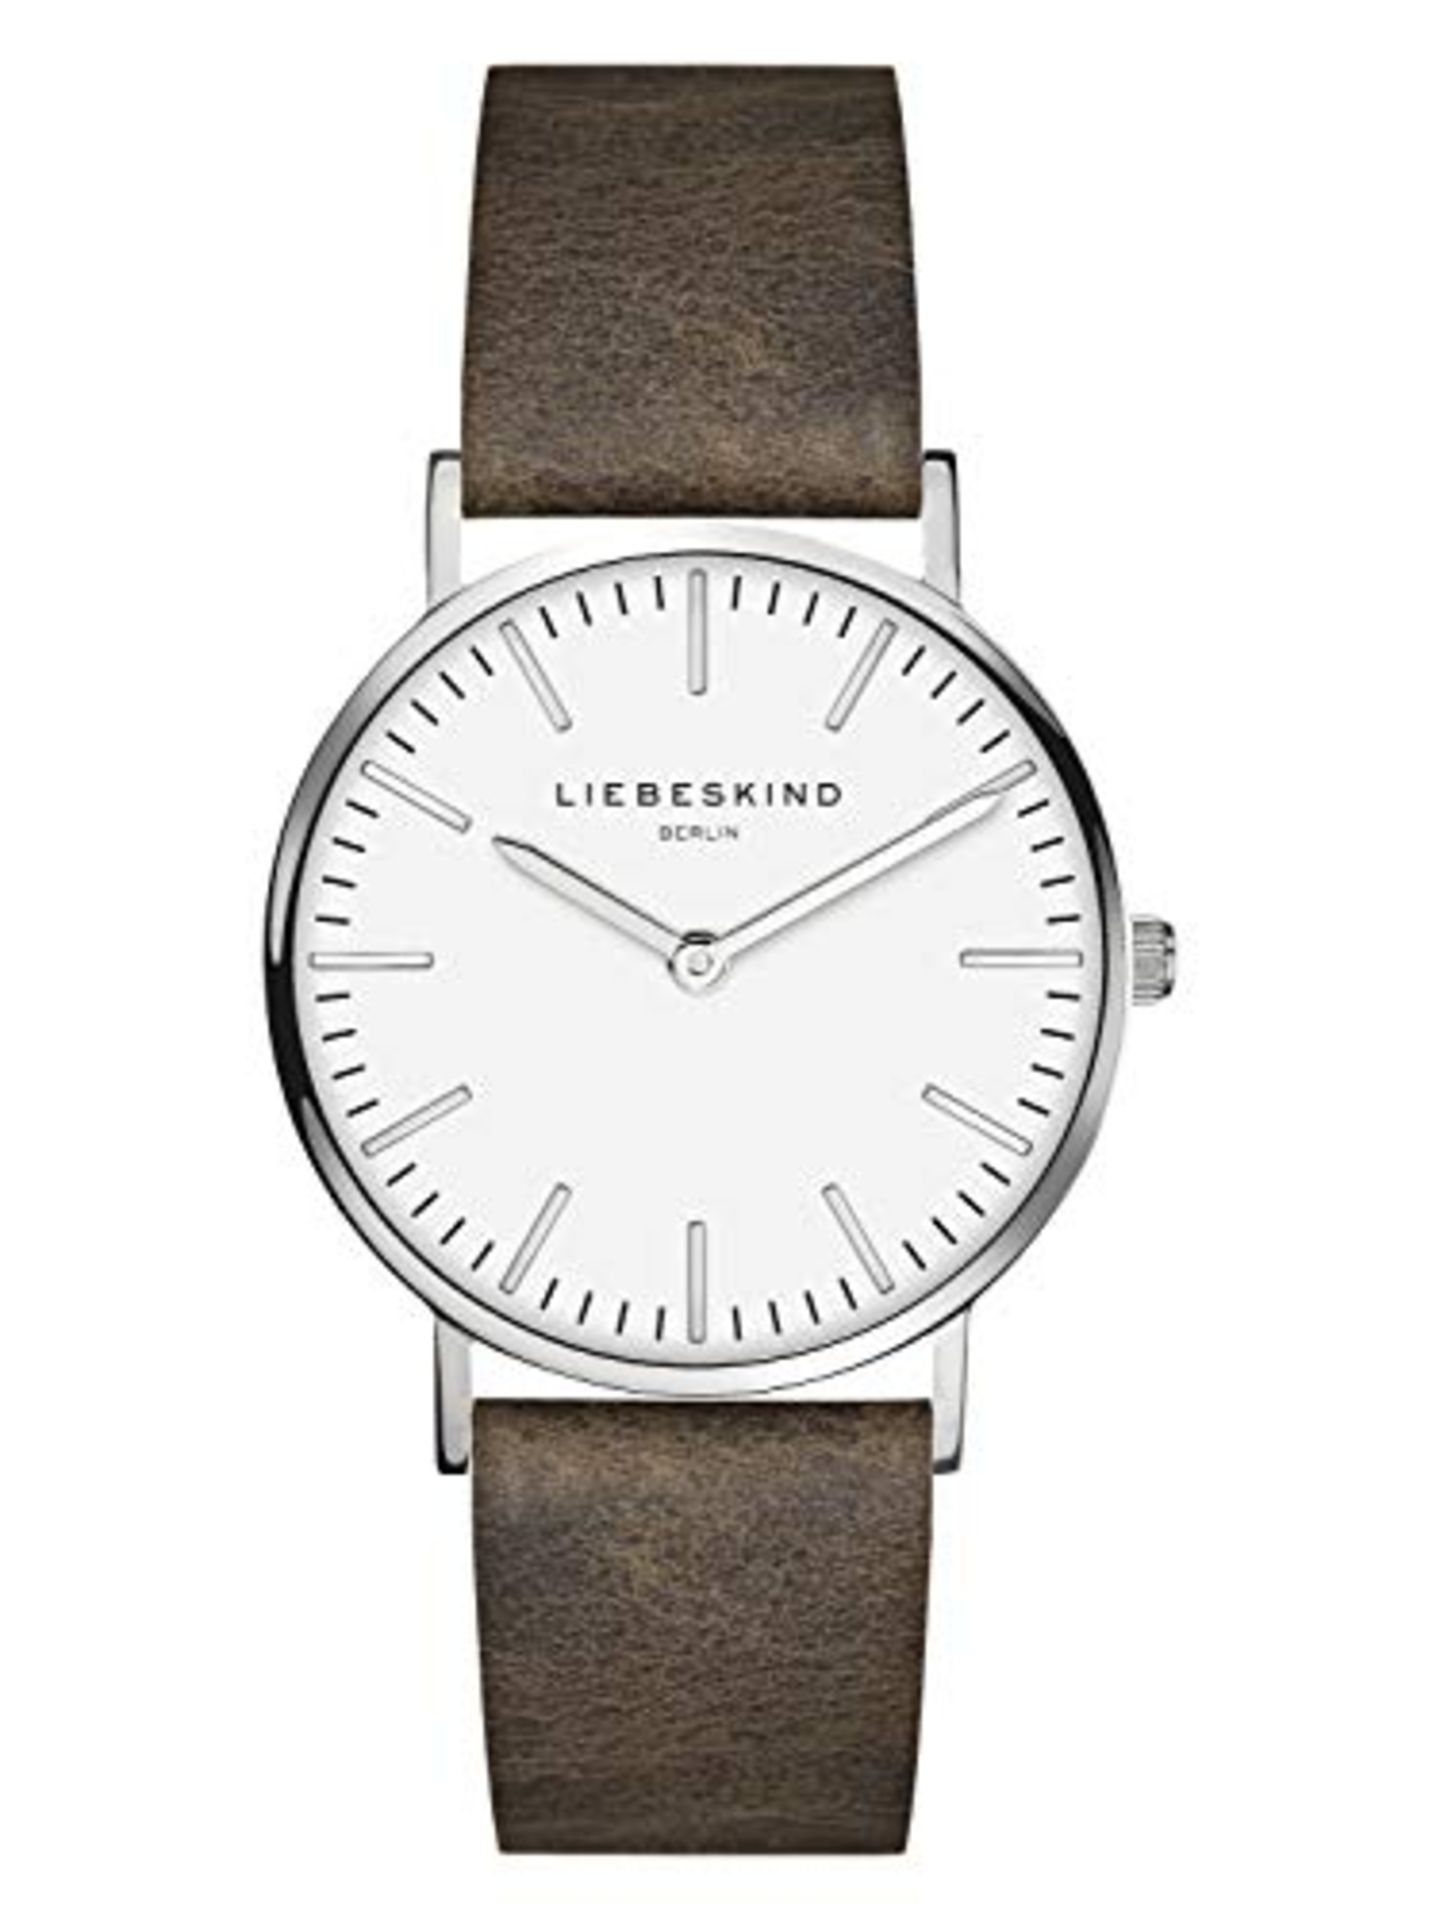 RRP £57.00 Liebeskind Berlin Women's Analog Quartz Wristwatch with Leather Strap LT-0086-LQ